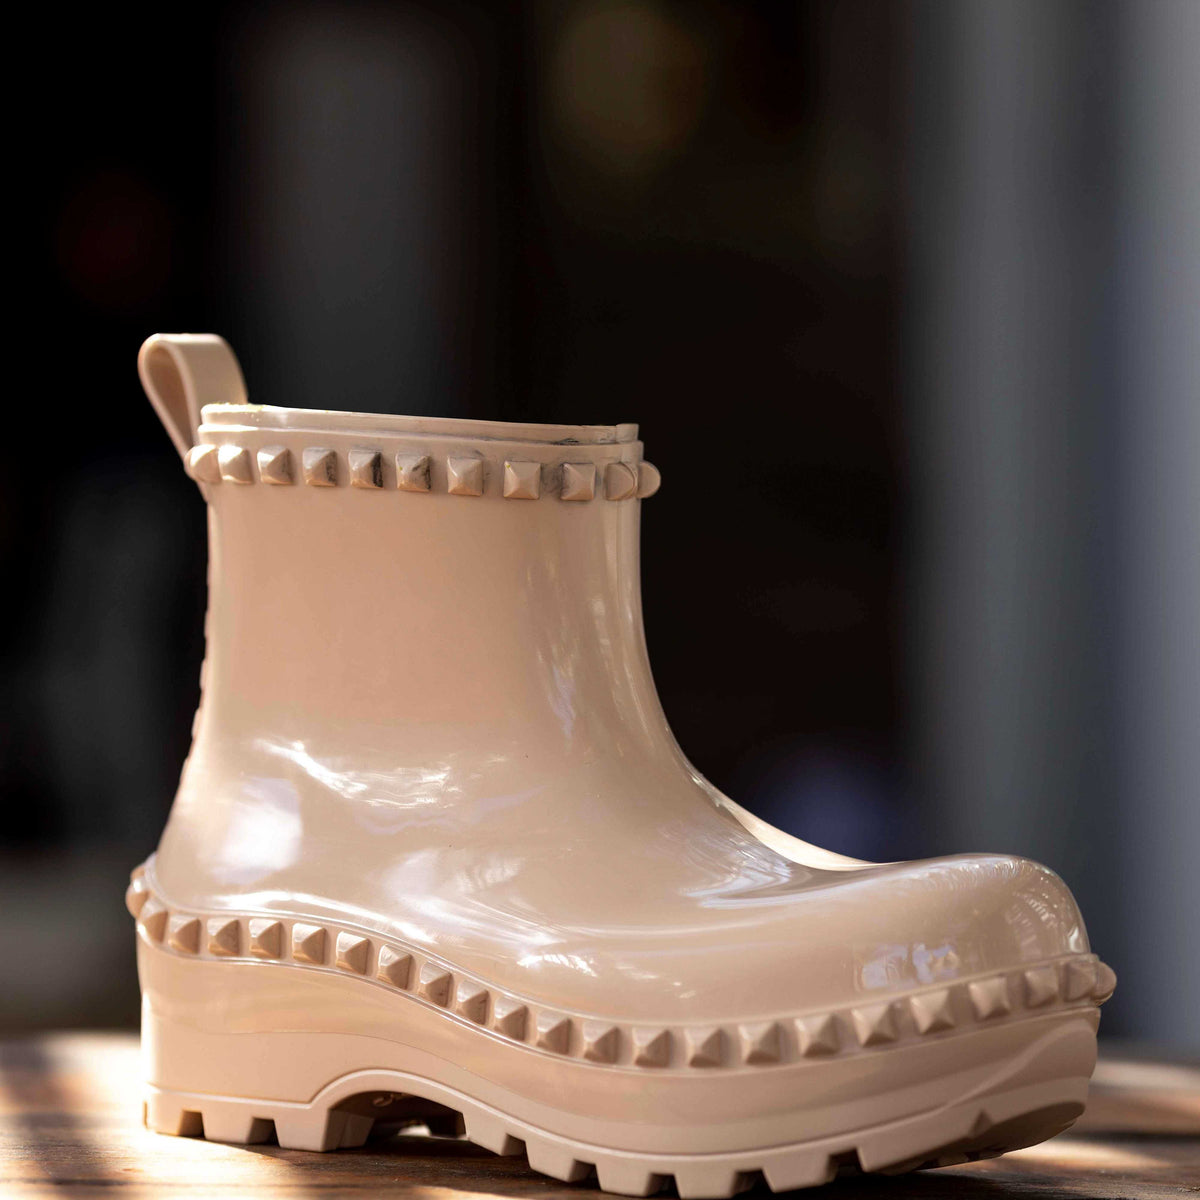 Recyclable Carmen Sol Graziano Bottega puddle boots in color nude